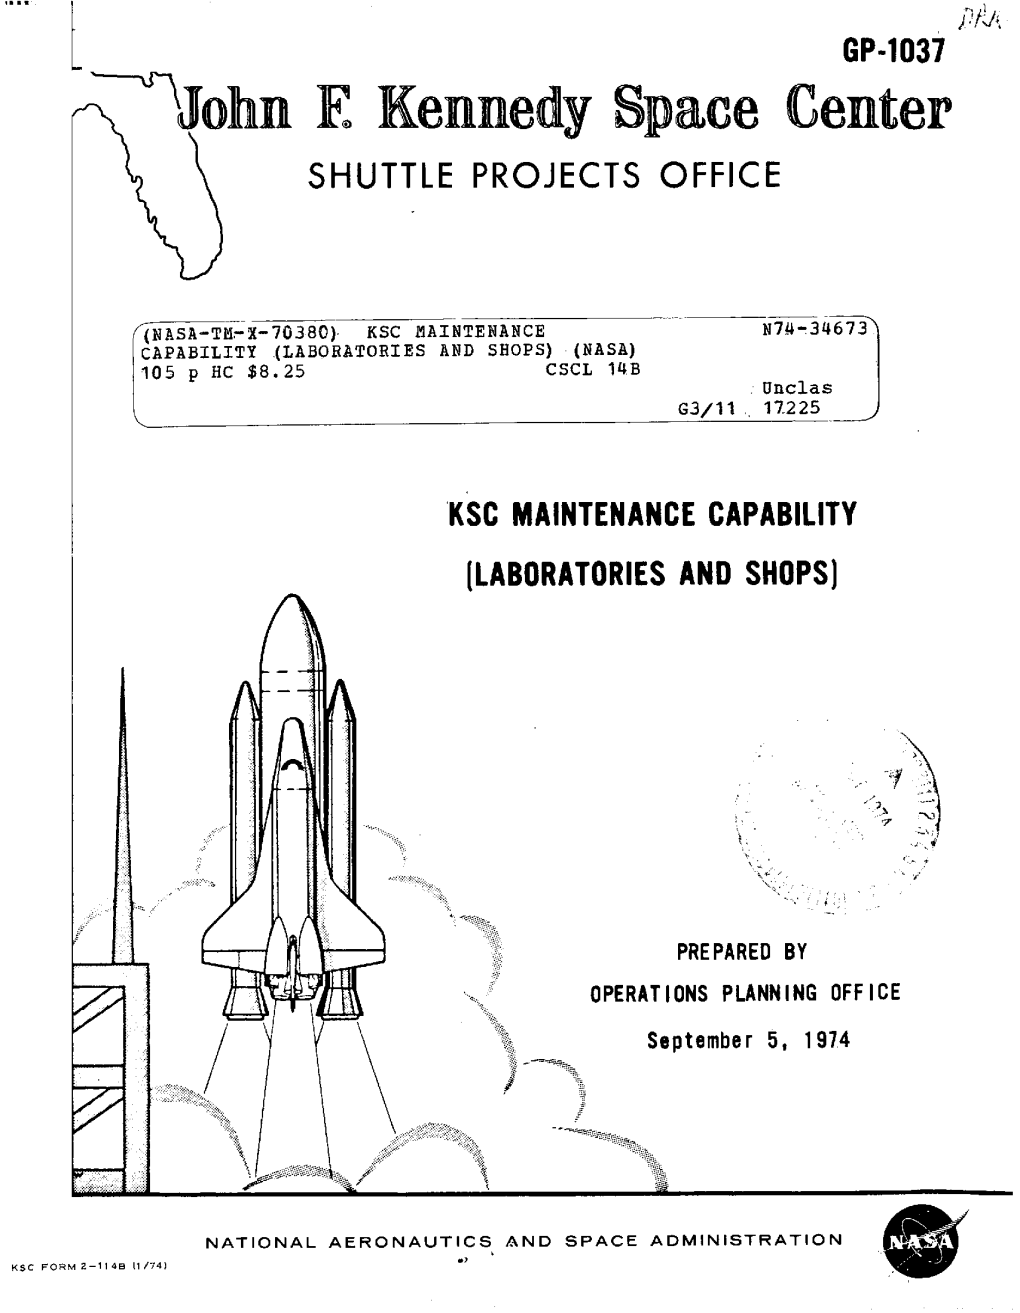 John E Kennedy Space Center SHUTTLE PROJECTS OFFICE